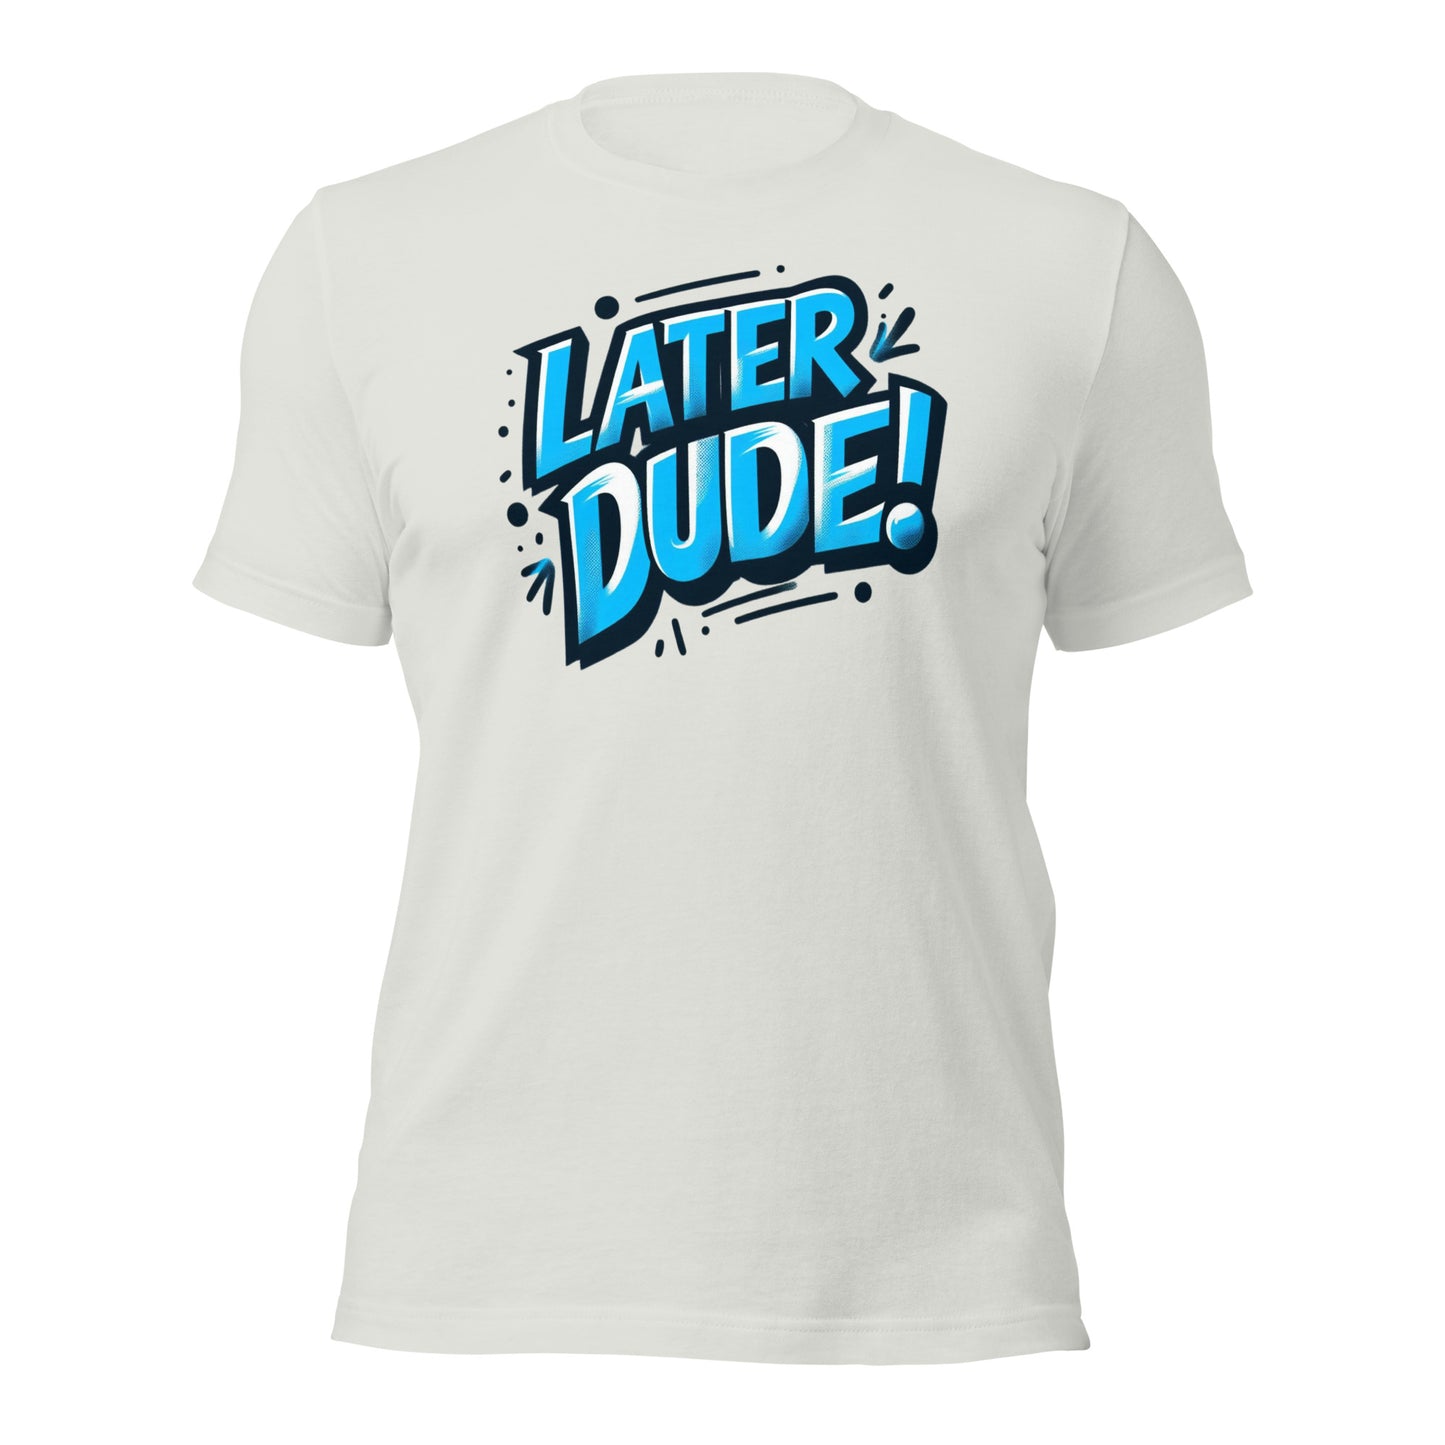 Later Dude Unisex T-Shirt